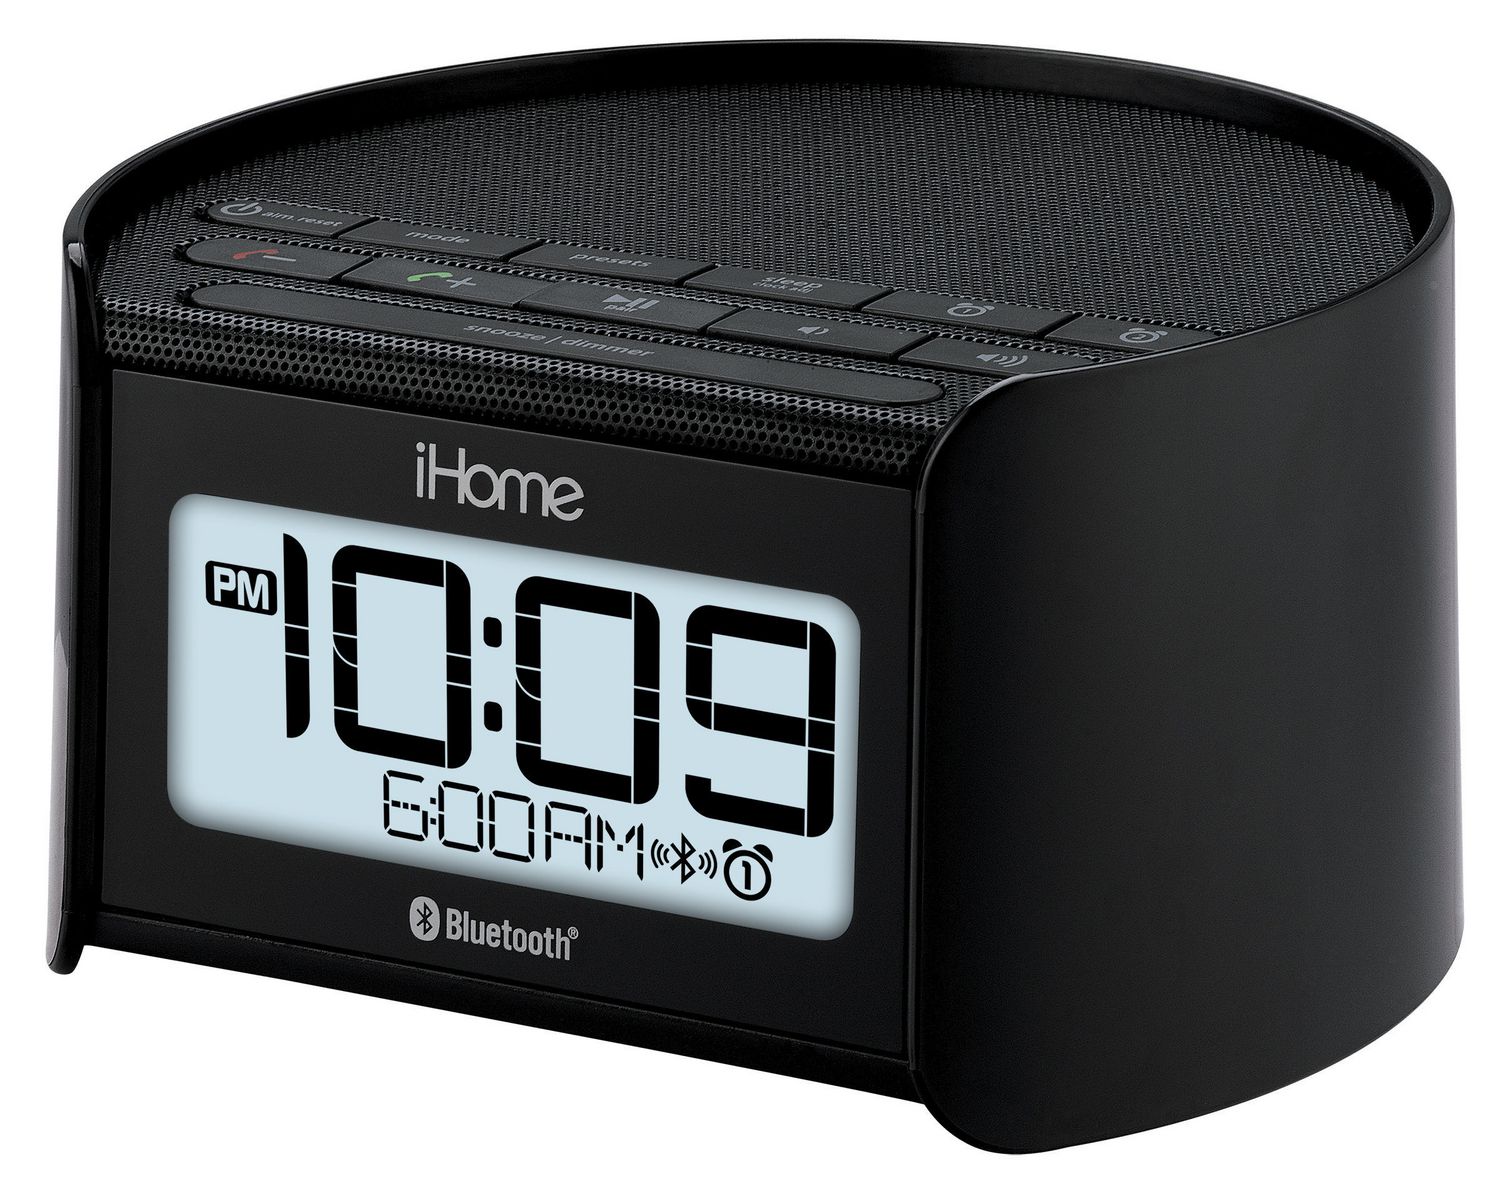 gentle alarm clock with cd player